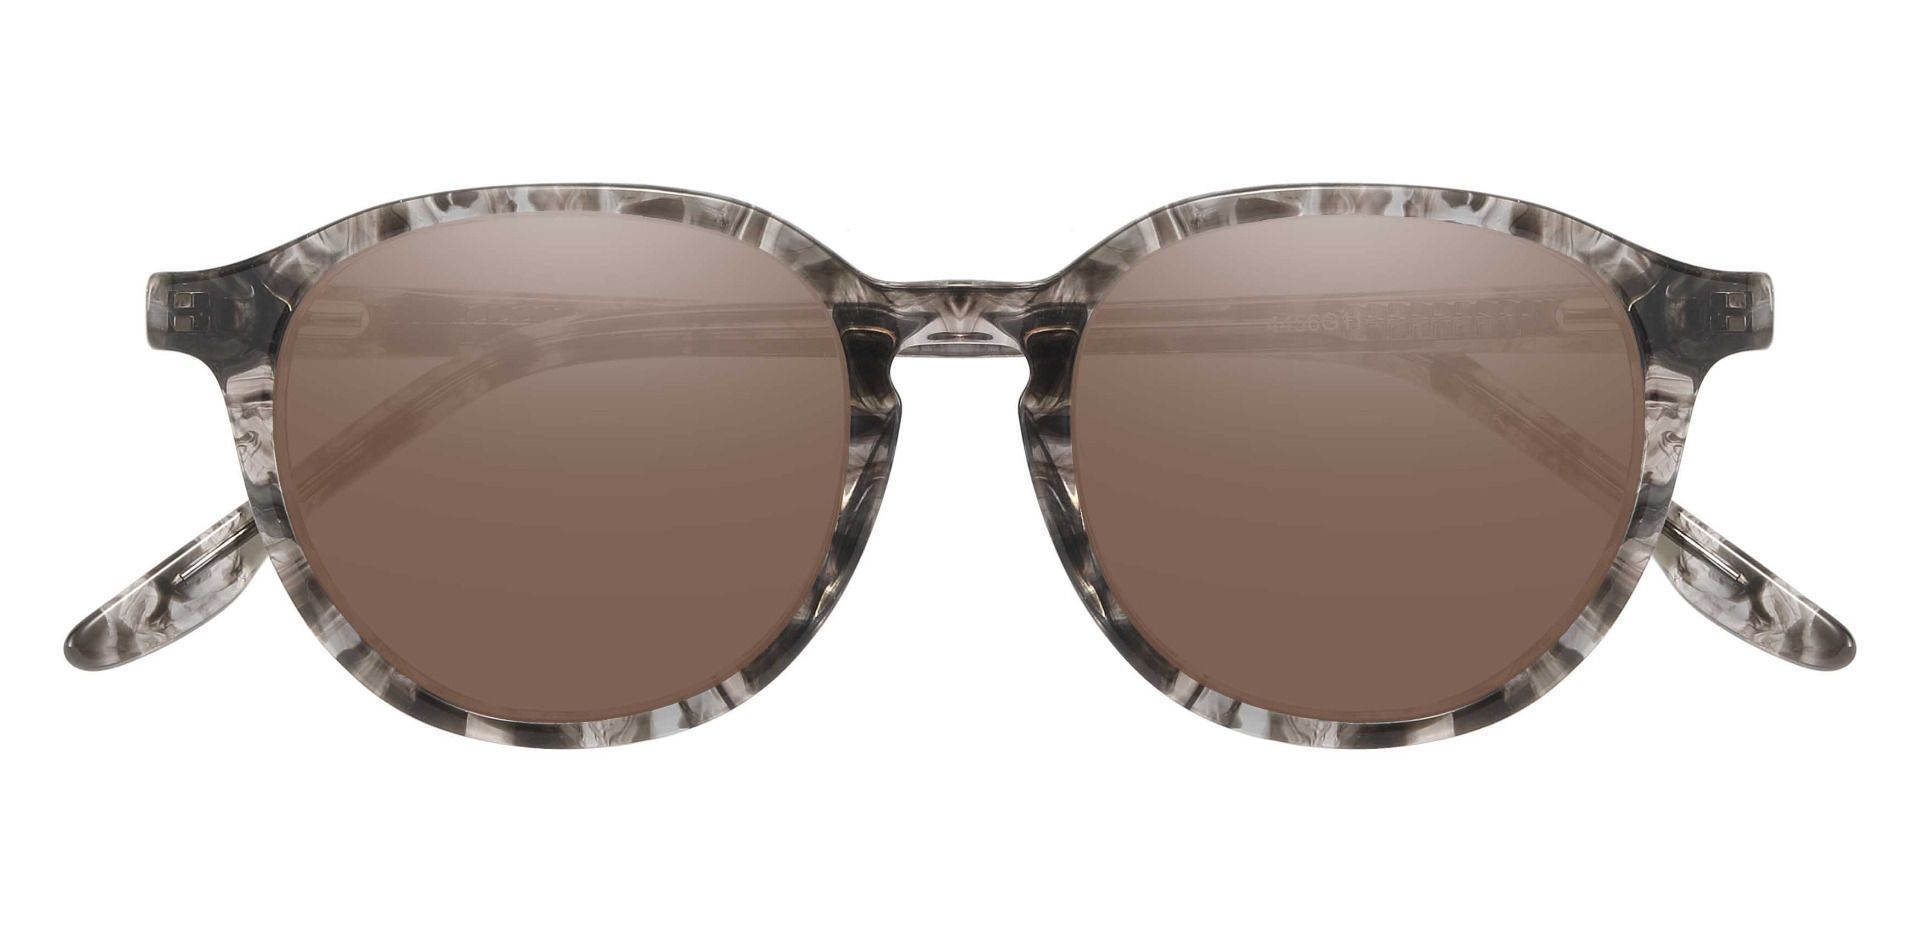 Ashley Oval Progressive Sunglasses - Gray Frame With Brown Lenses